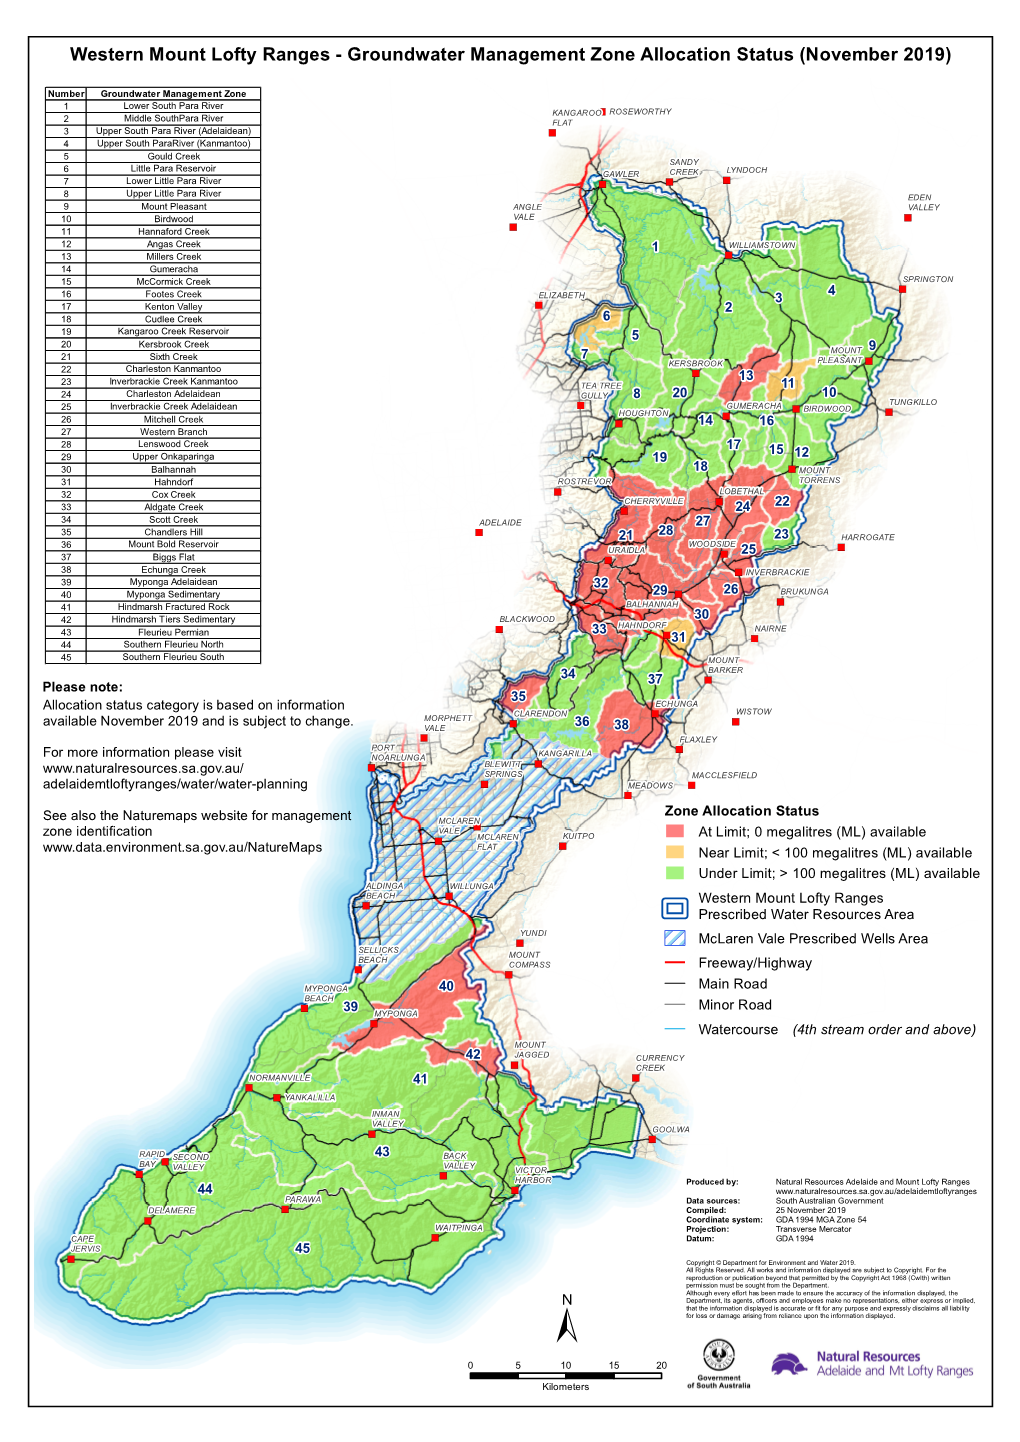 Groundwater Management Zone Allocation Status (November 2019)